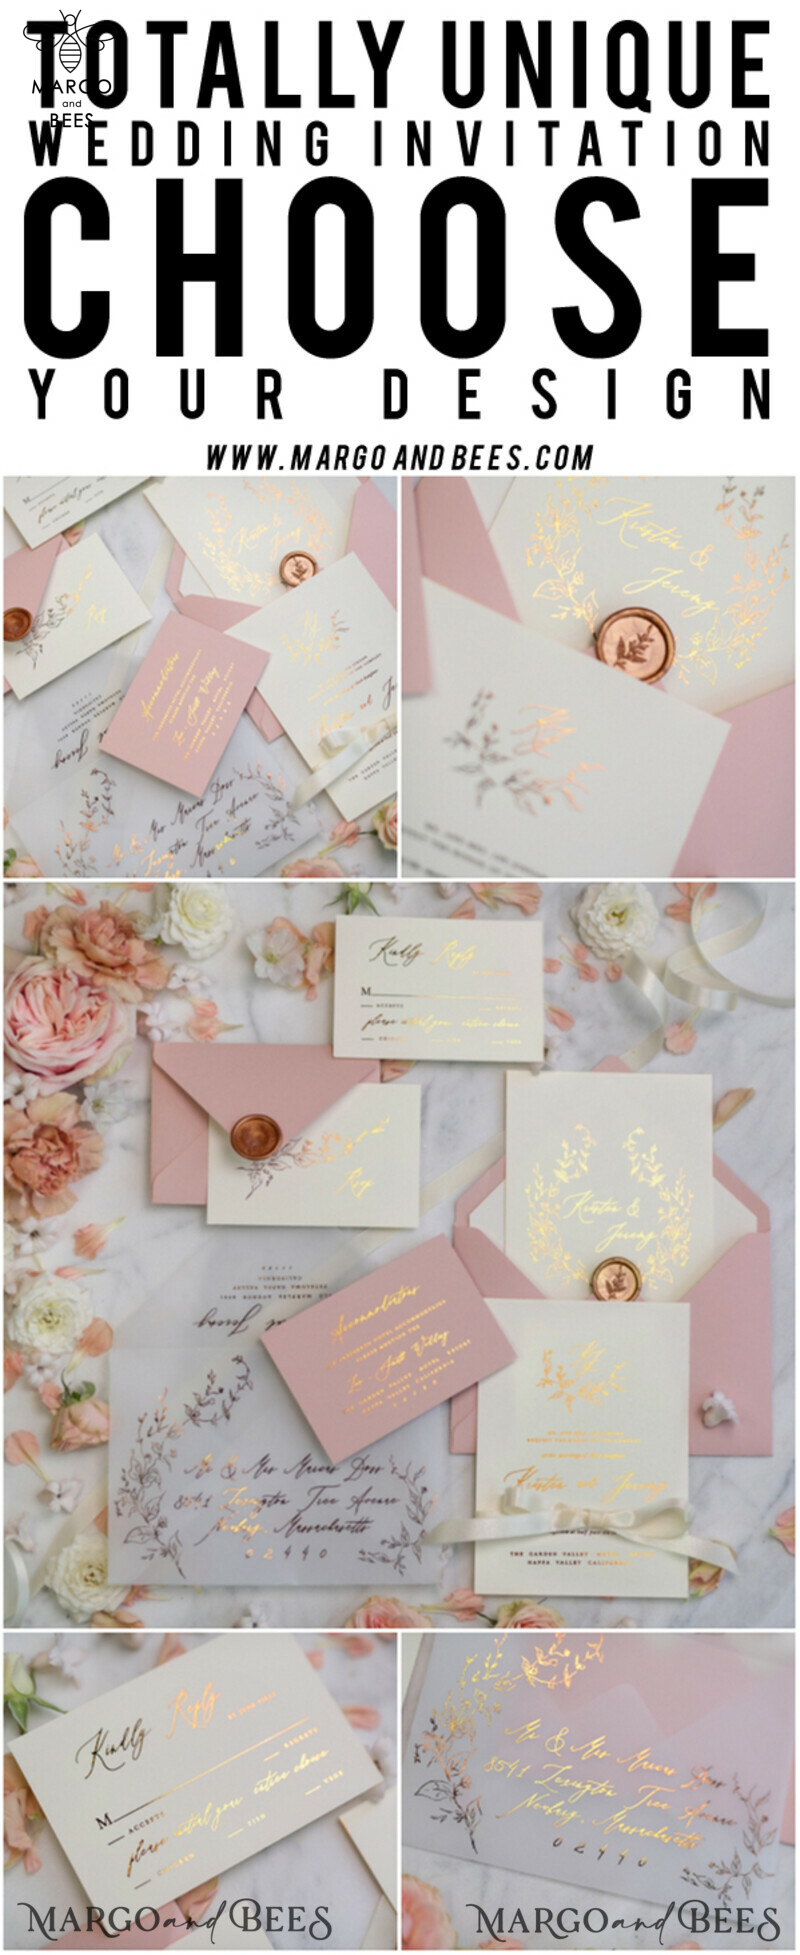 Bespoke Vellum Wedding Invitation Suite: Romantic Blush Pink and Glamour Gold Foil for an Elegant Golden Affair-37